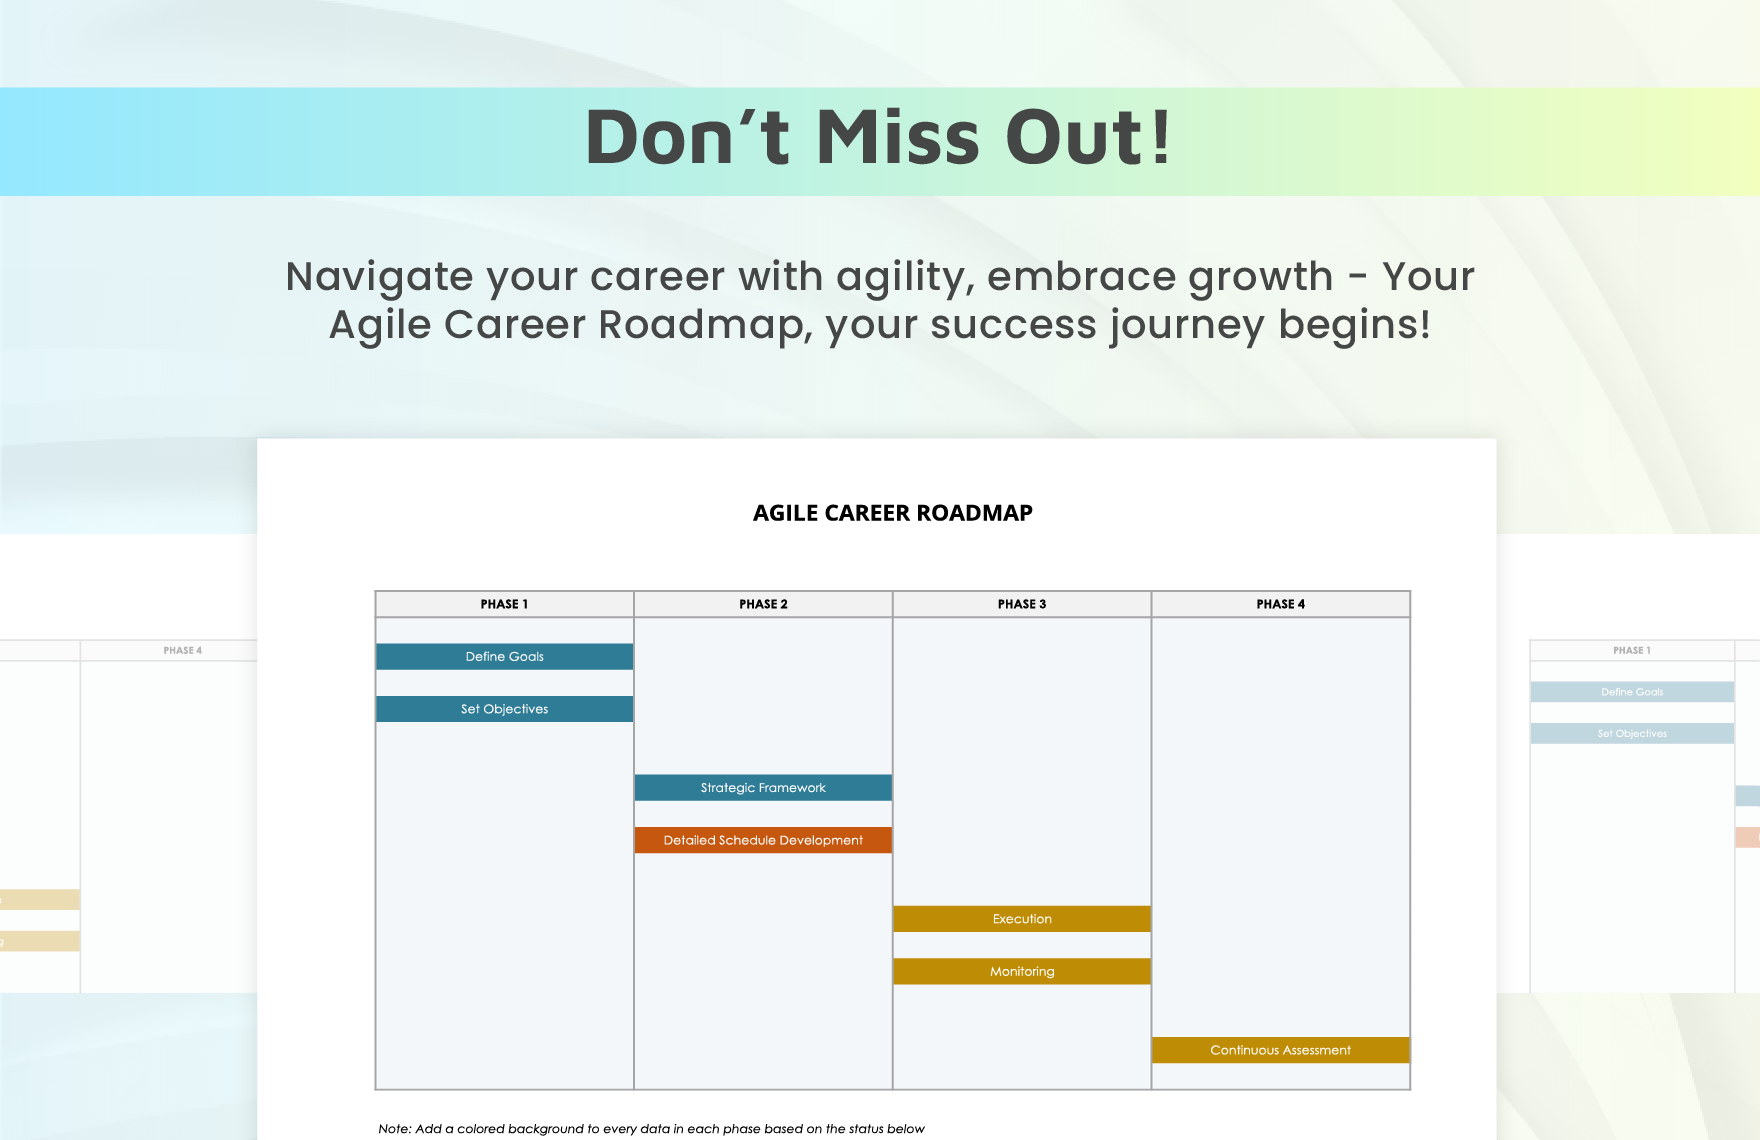 Agile Career Roadmap Template